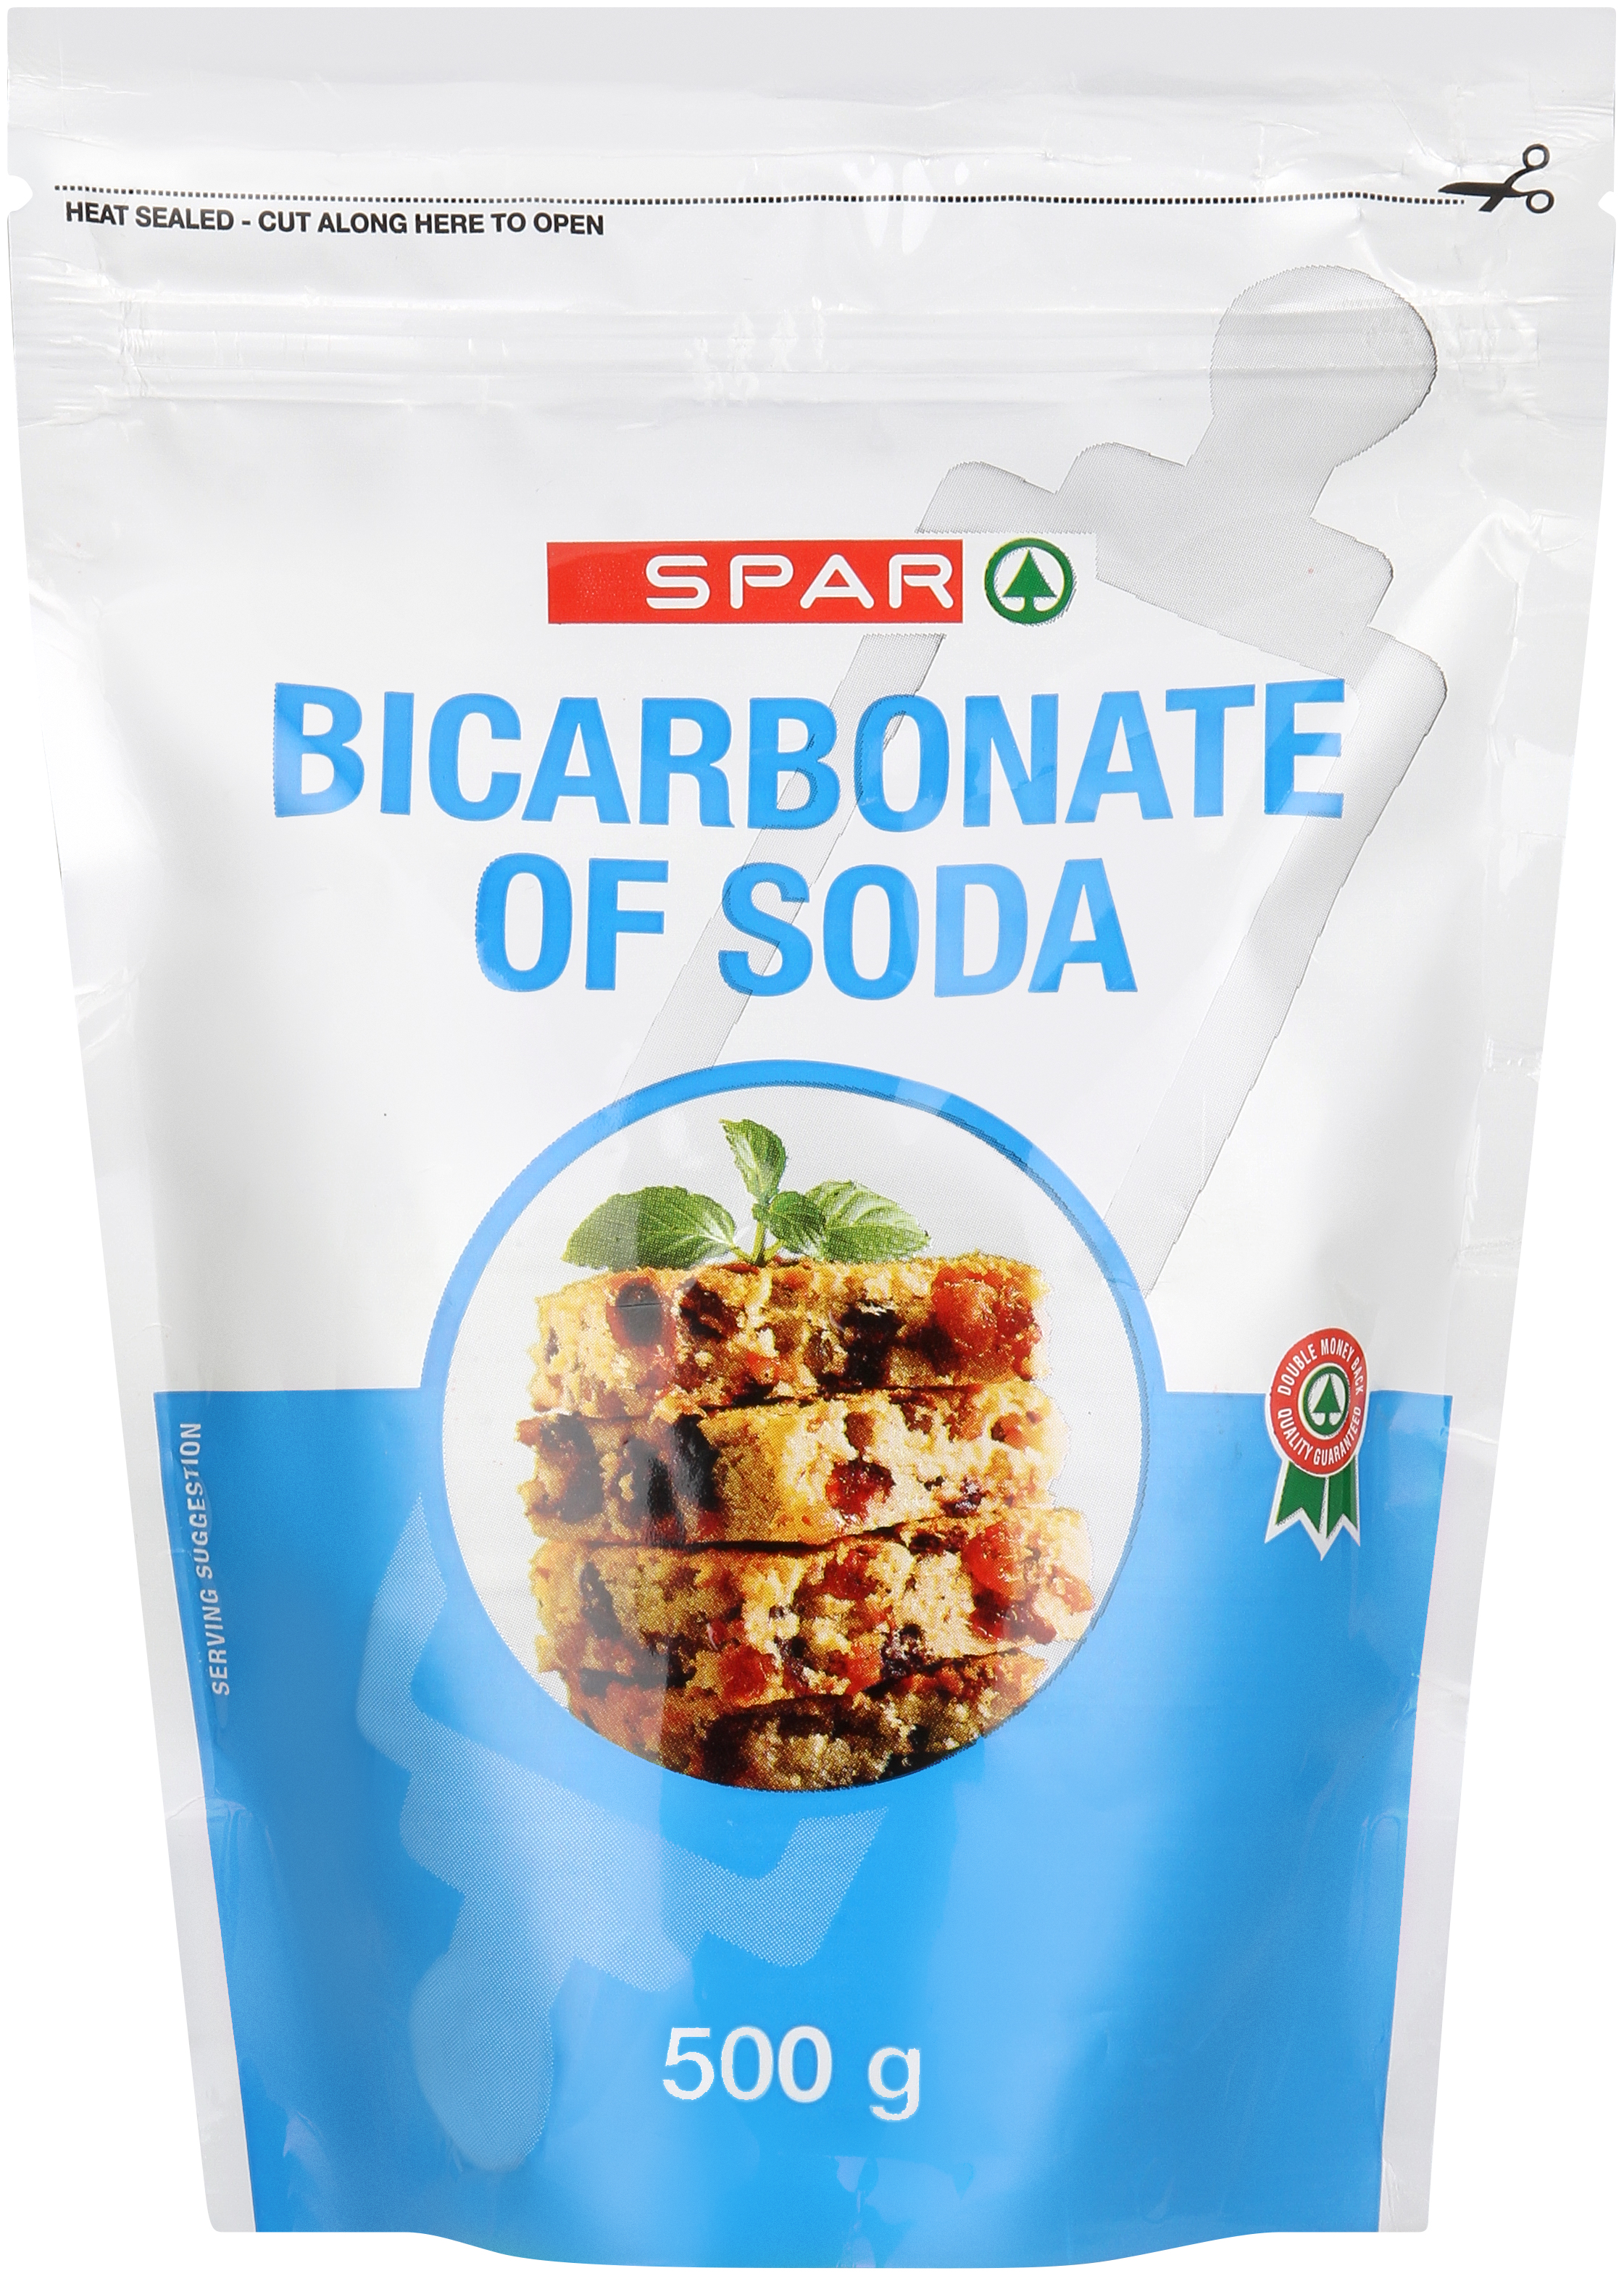 bicarbonate of soda